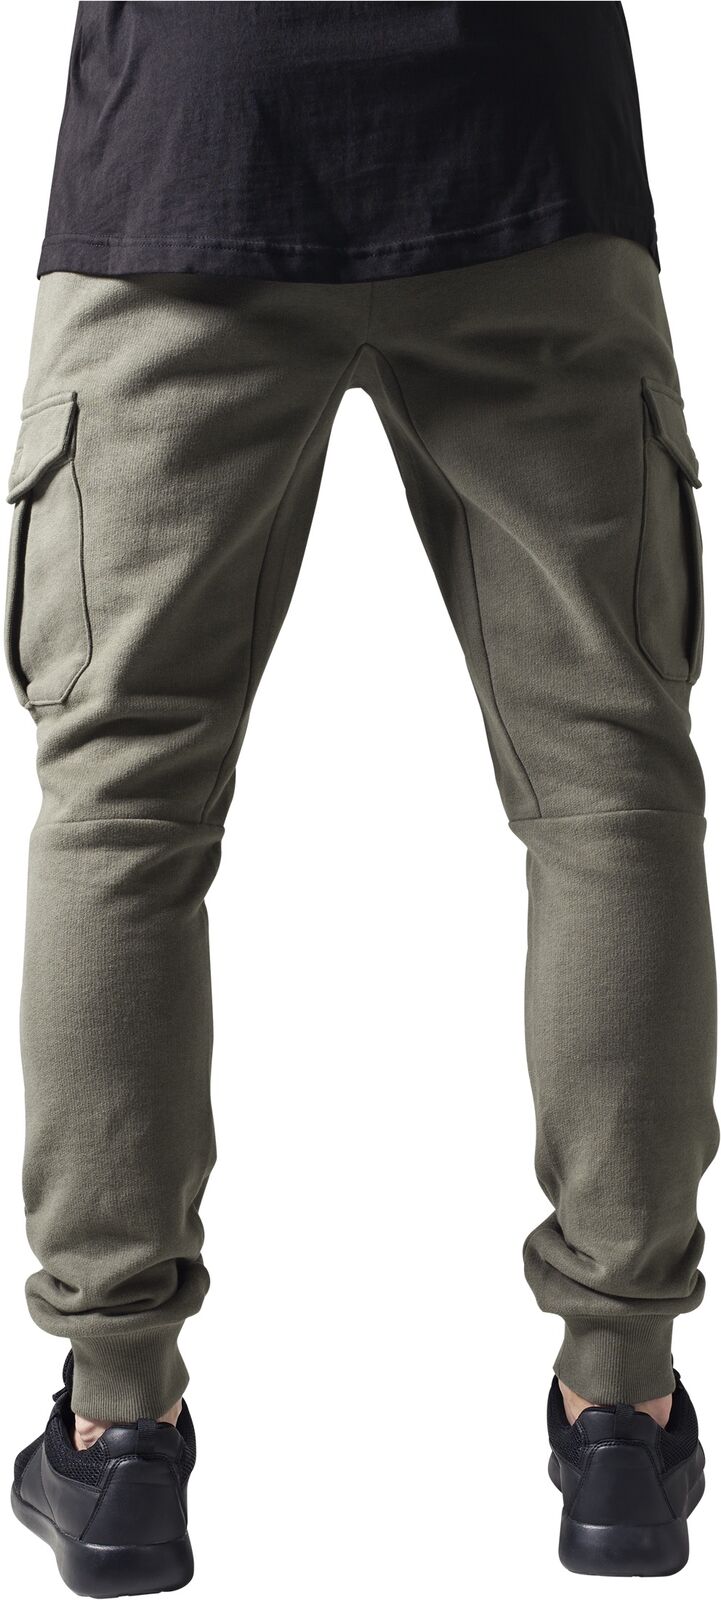 Urban Classics Sweatpants Fitted Cargo Sweatpants Olive | eBay